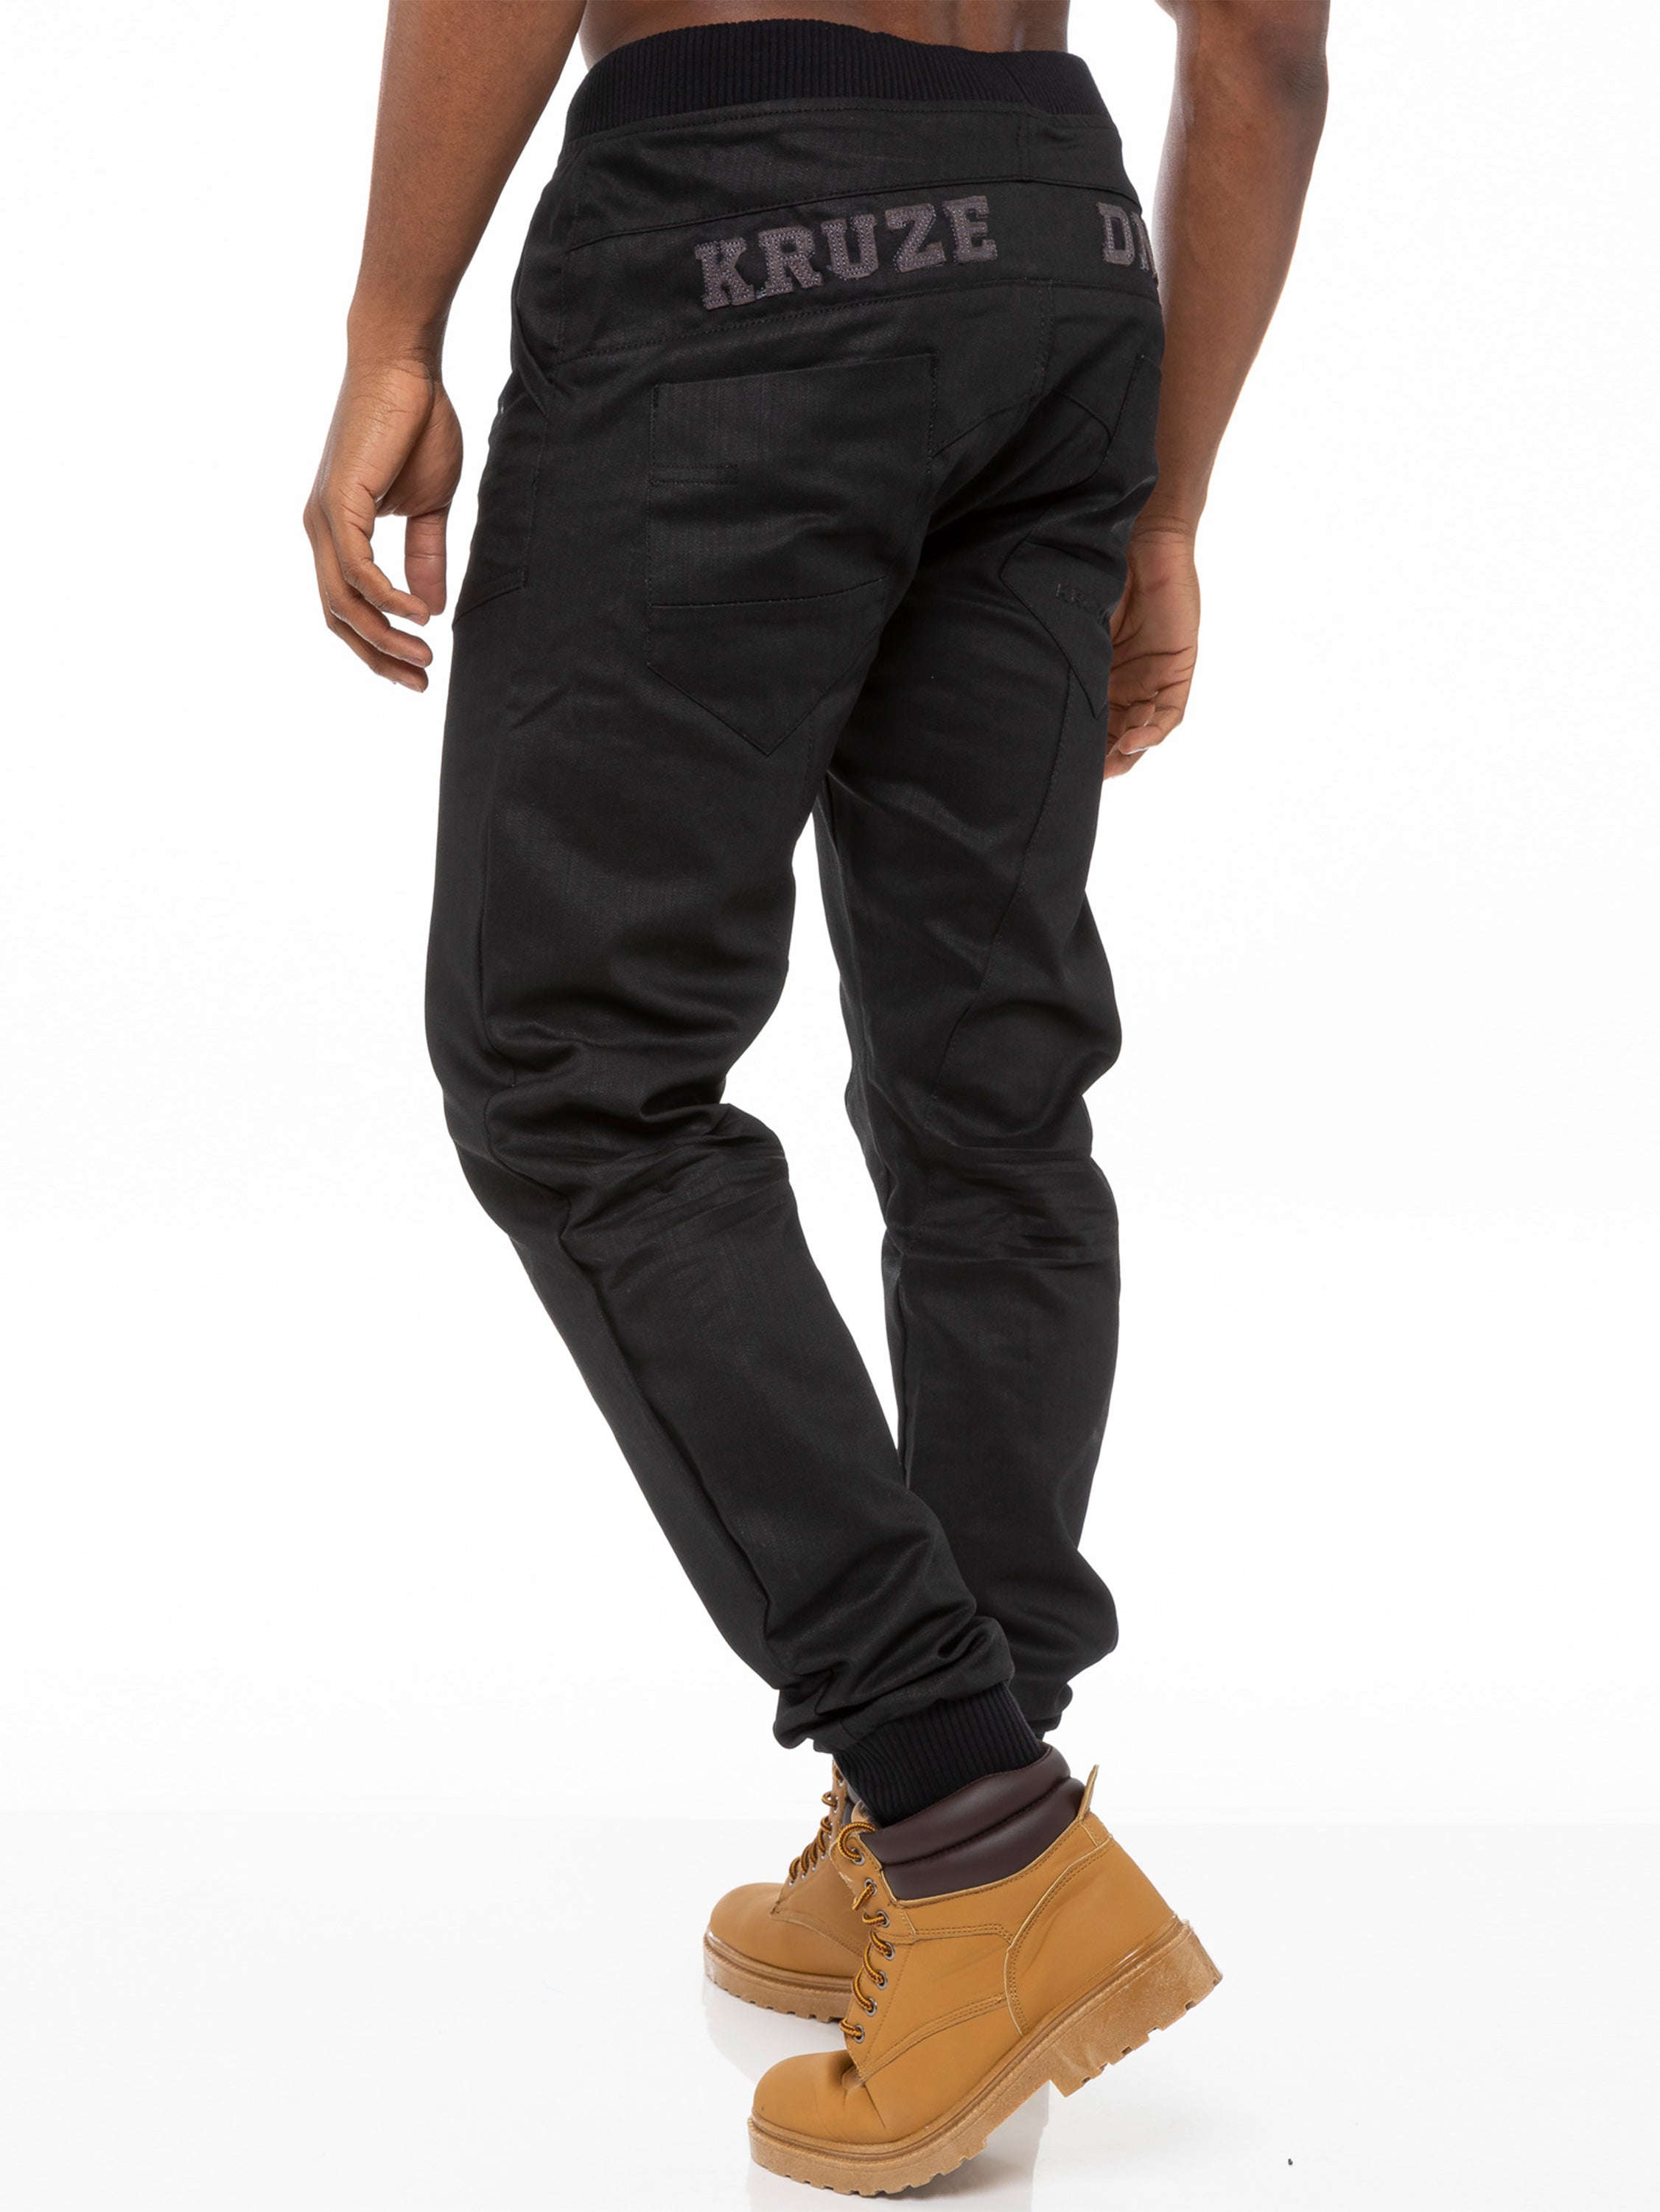 KRUZE Mens Designer Casual Branded Denim Cuffed Jeans Pants